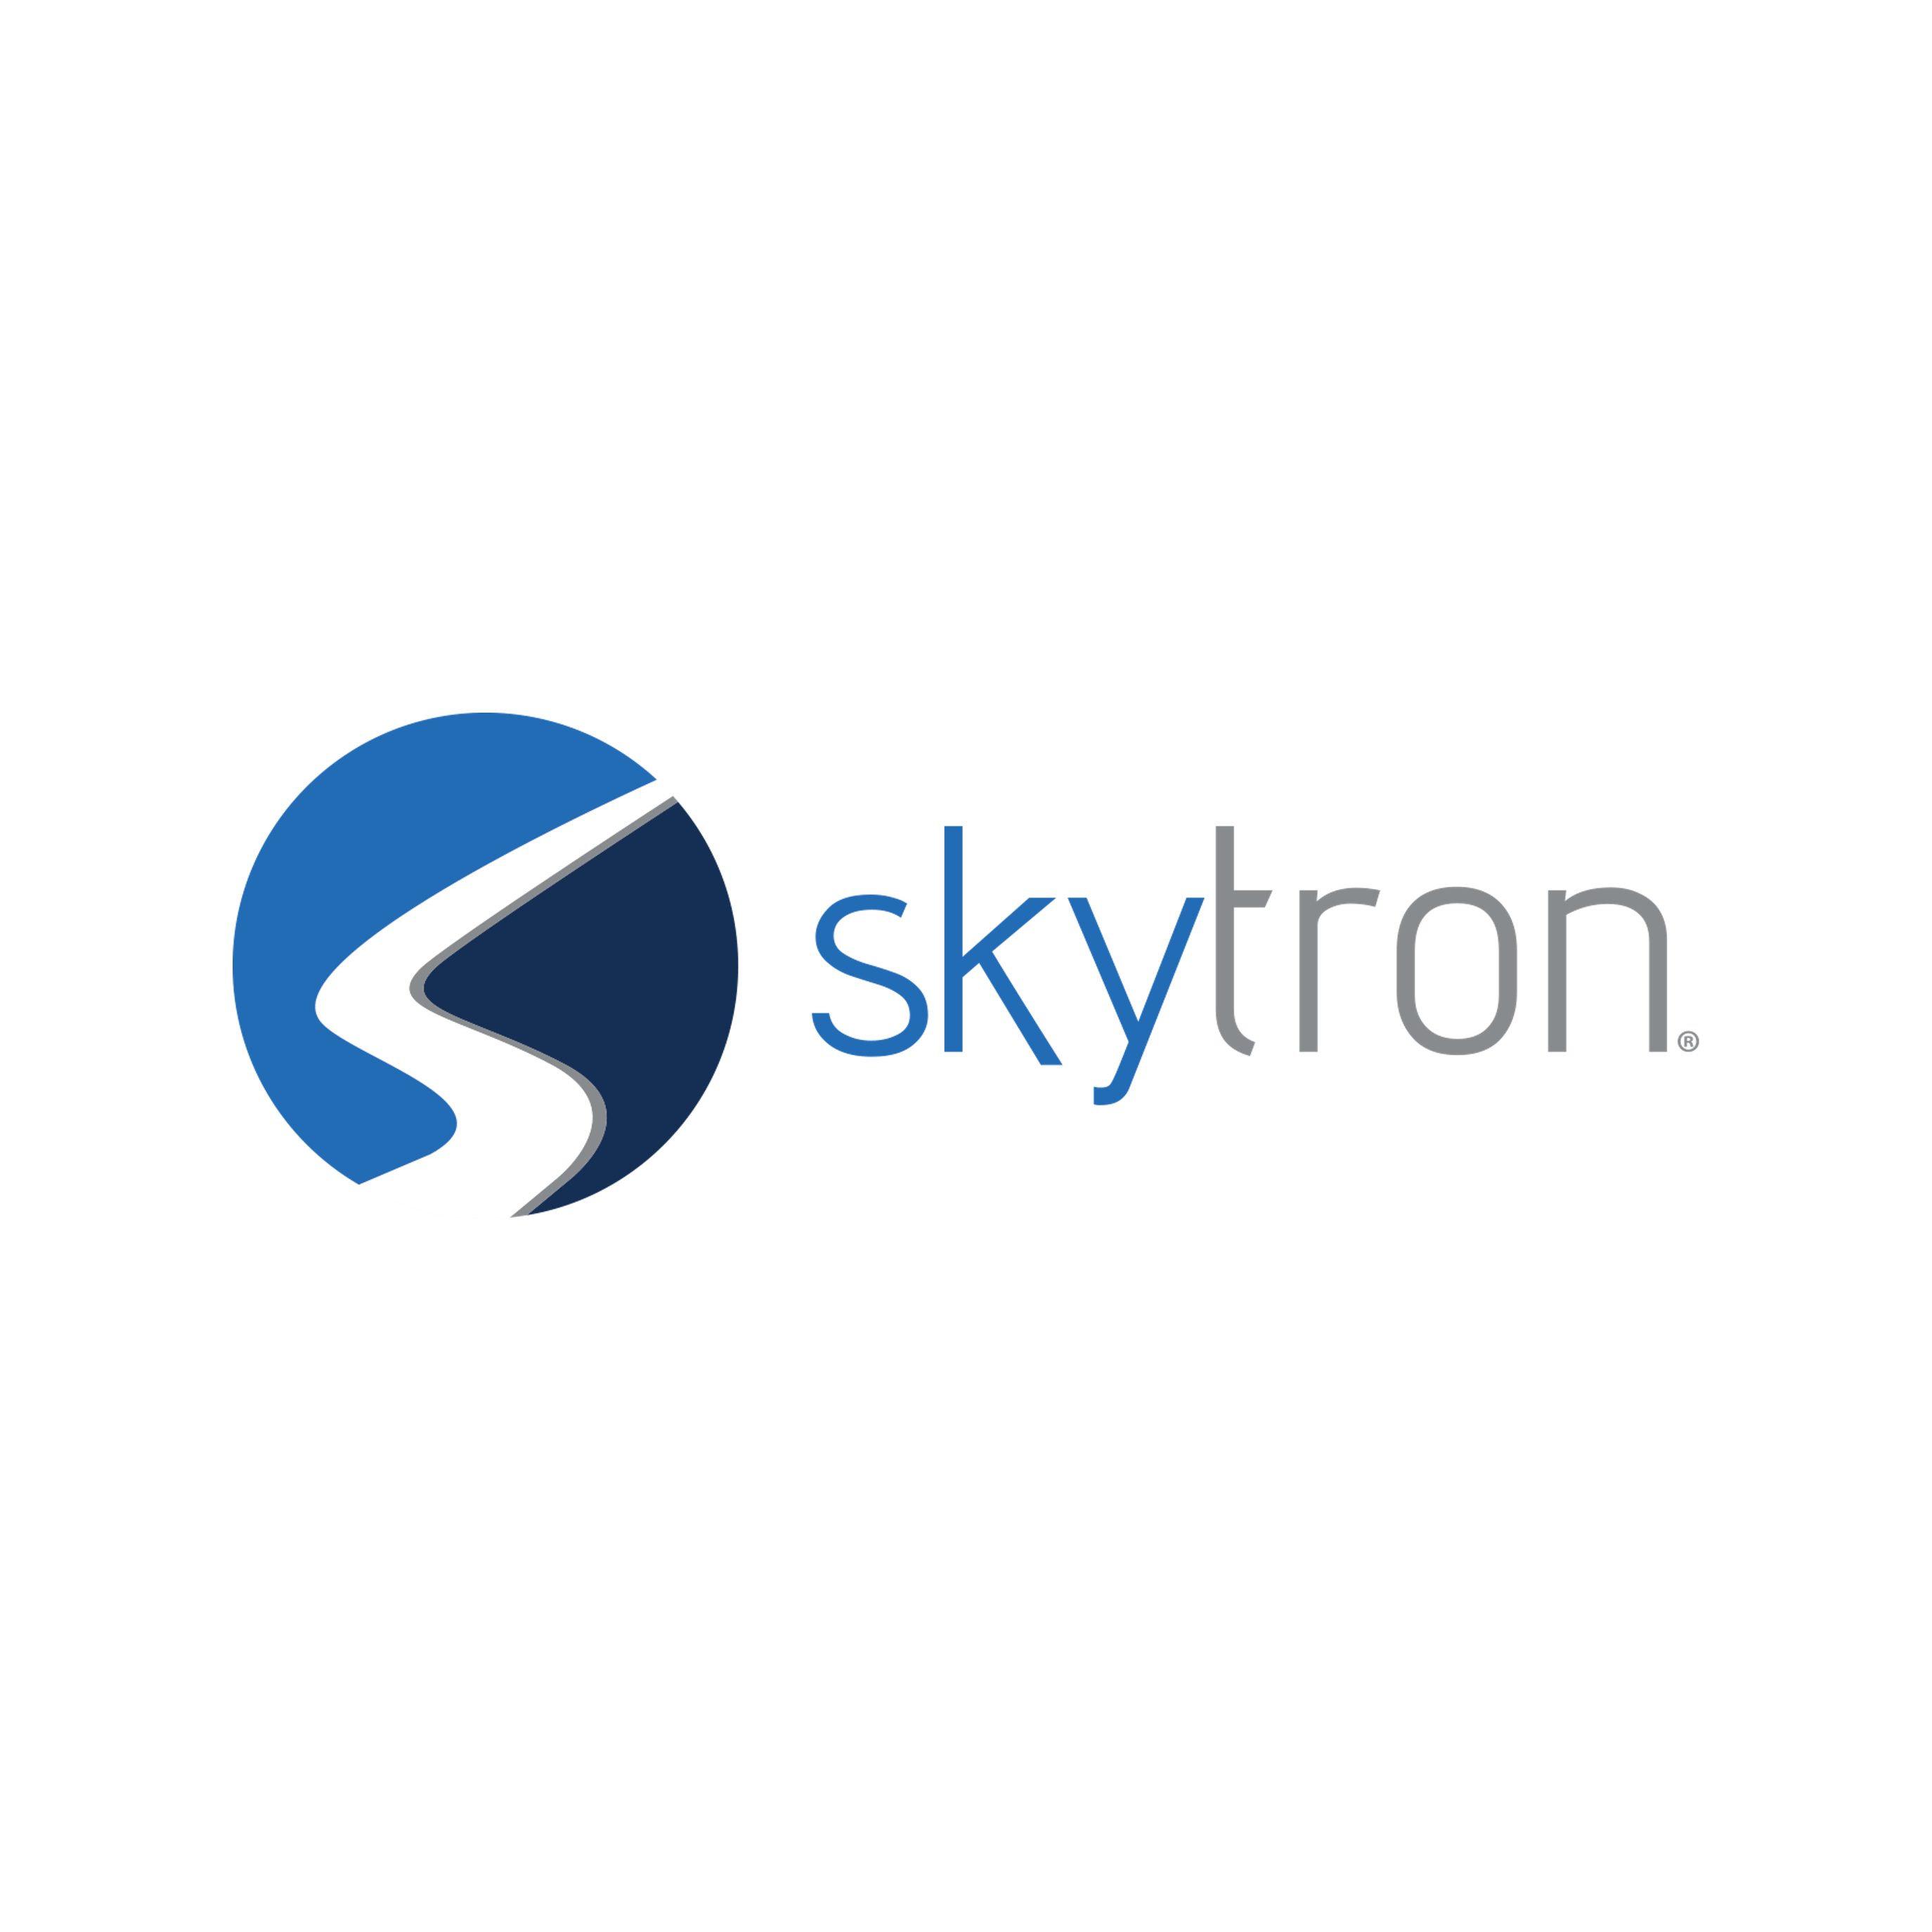 Equiptrack includes Skytron equipment